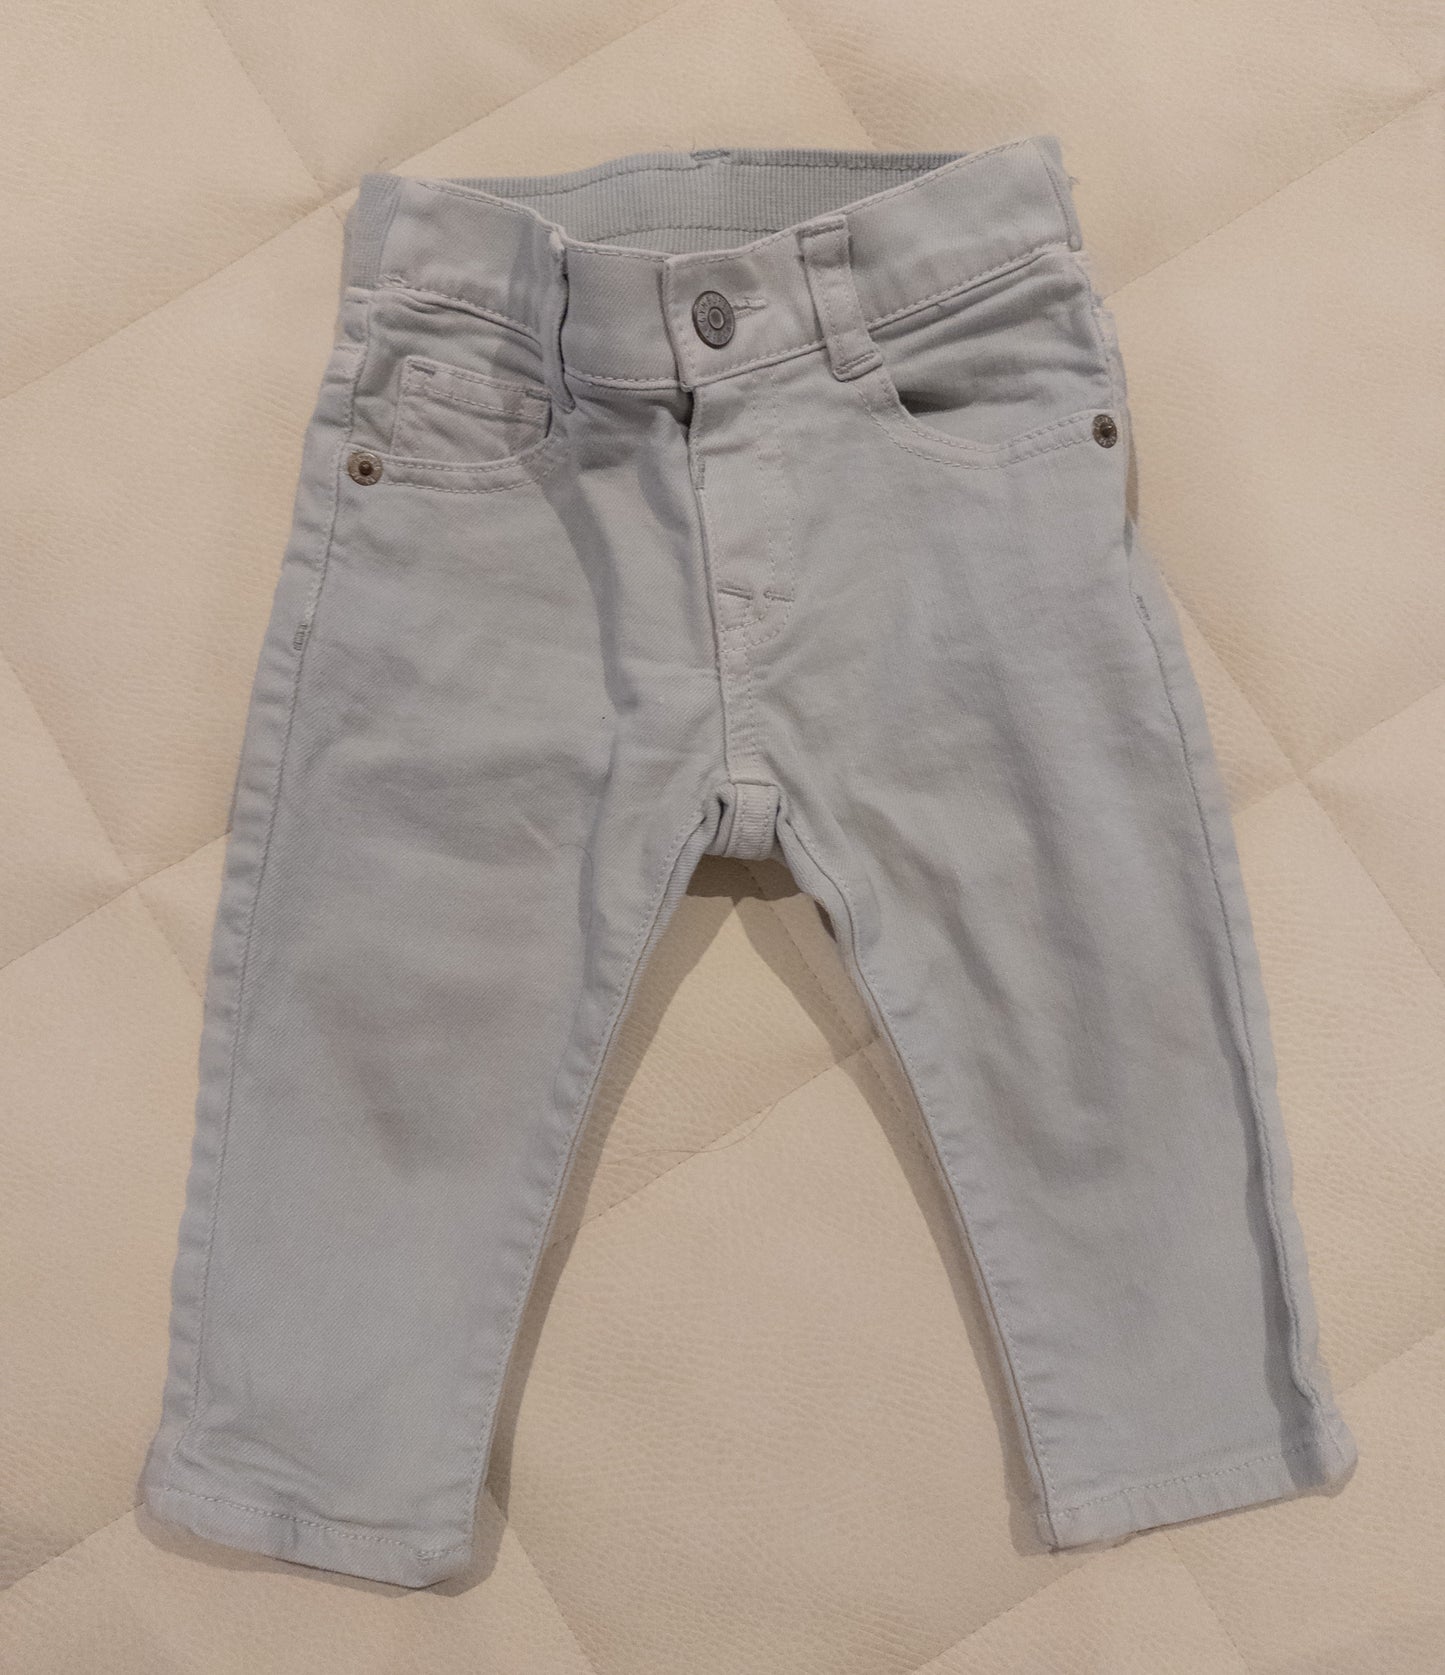 12-18m Gymboree Gray Skinny Jeans - EUC